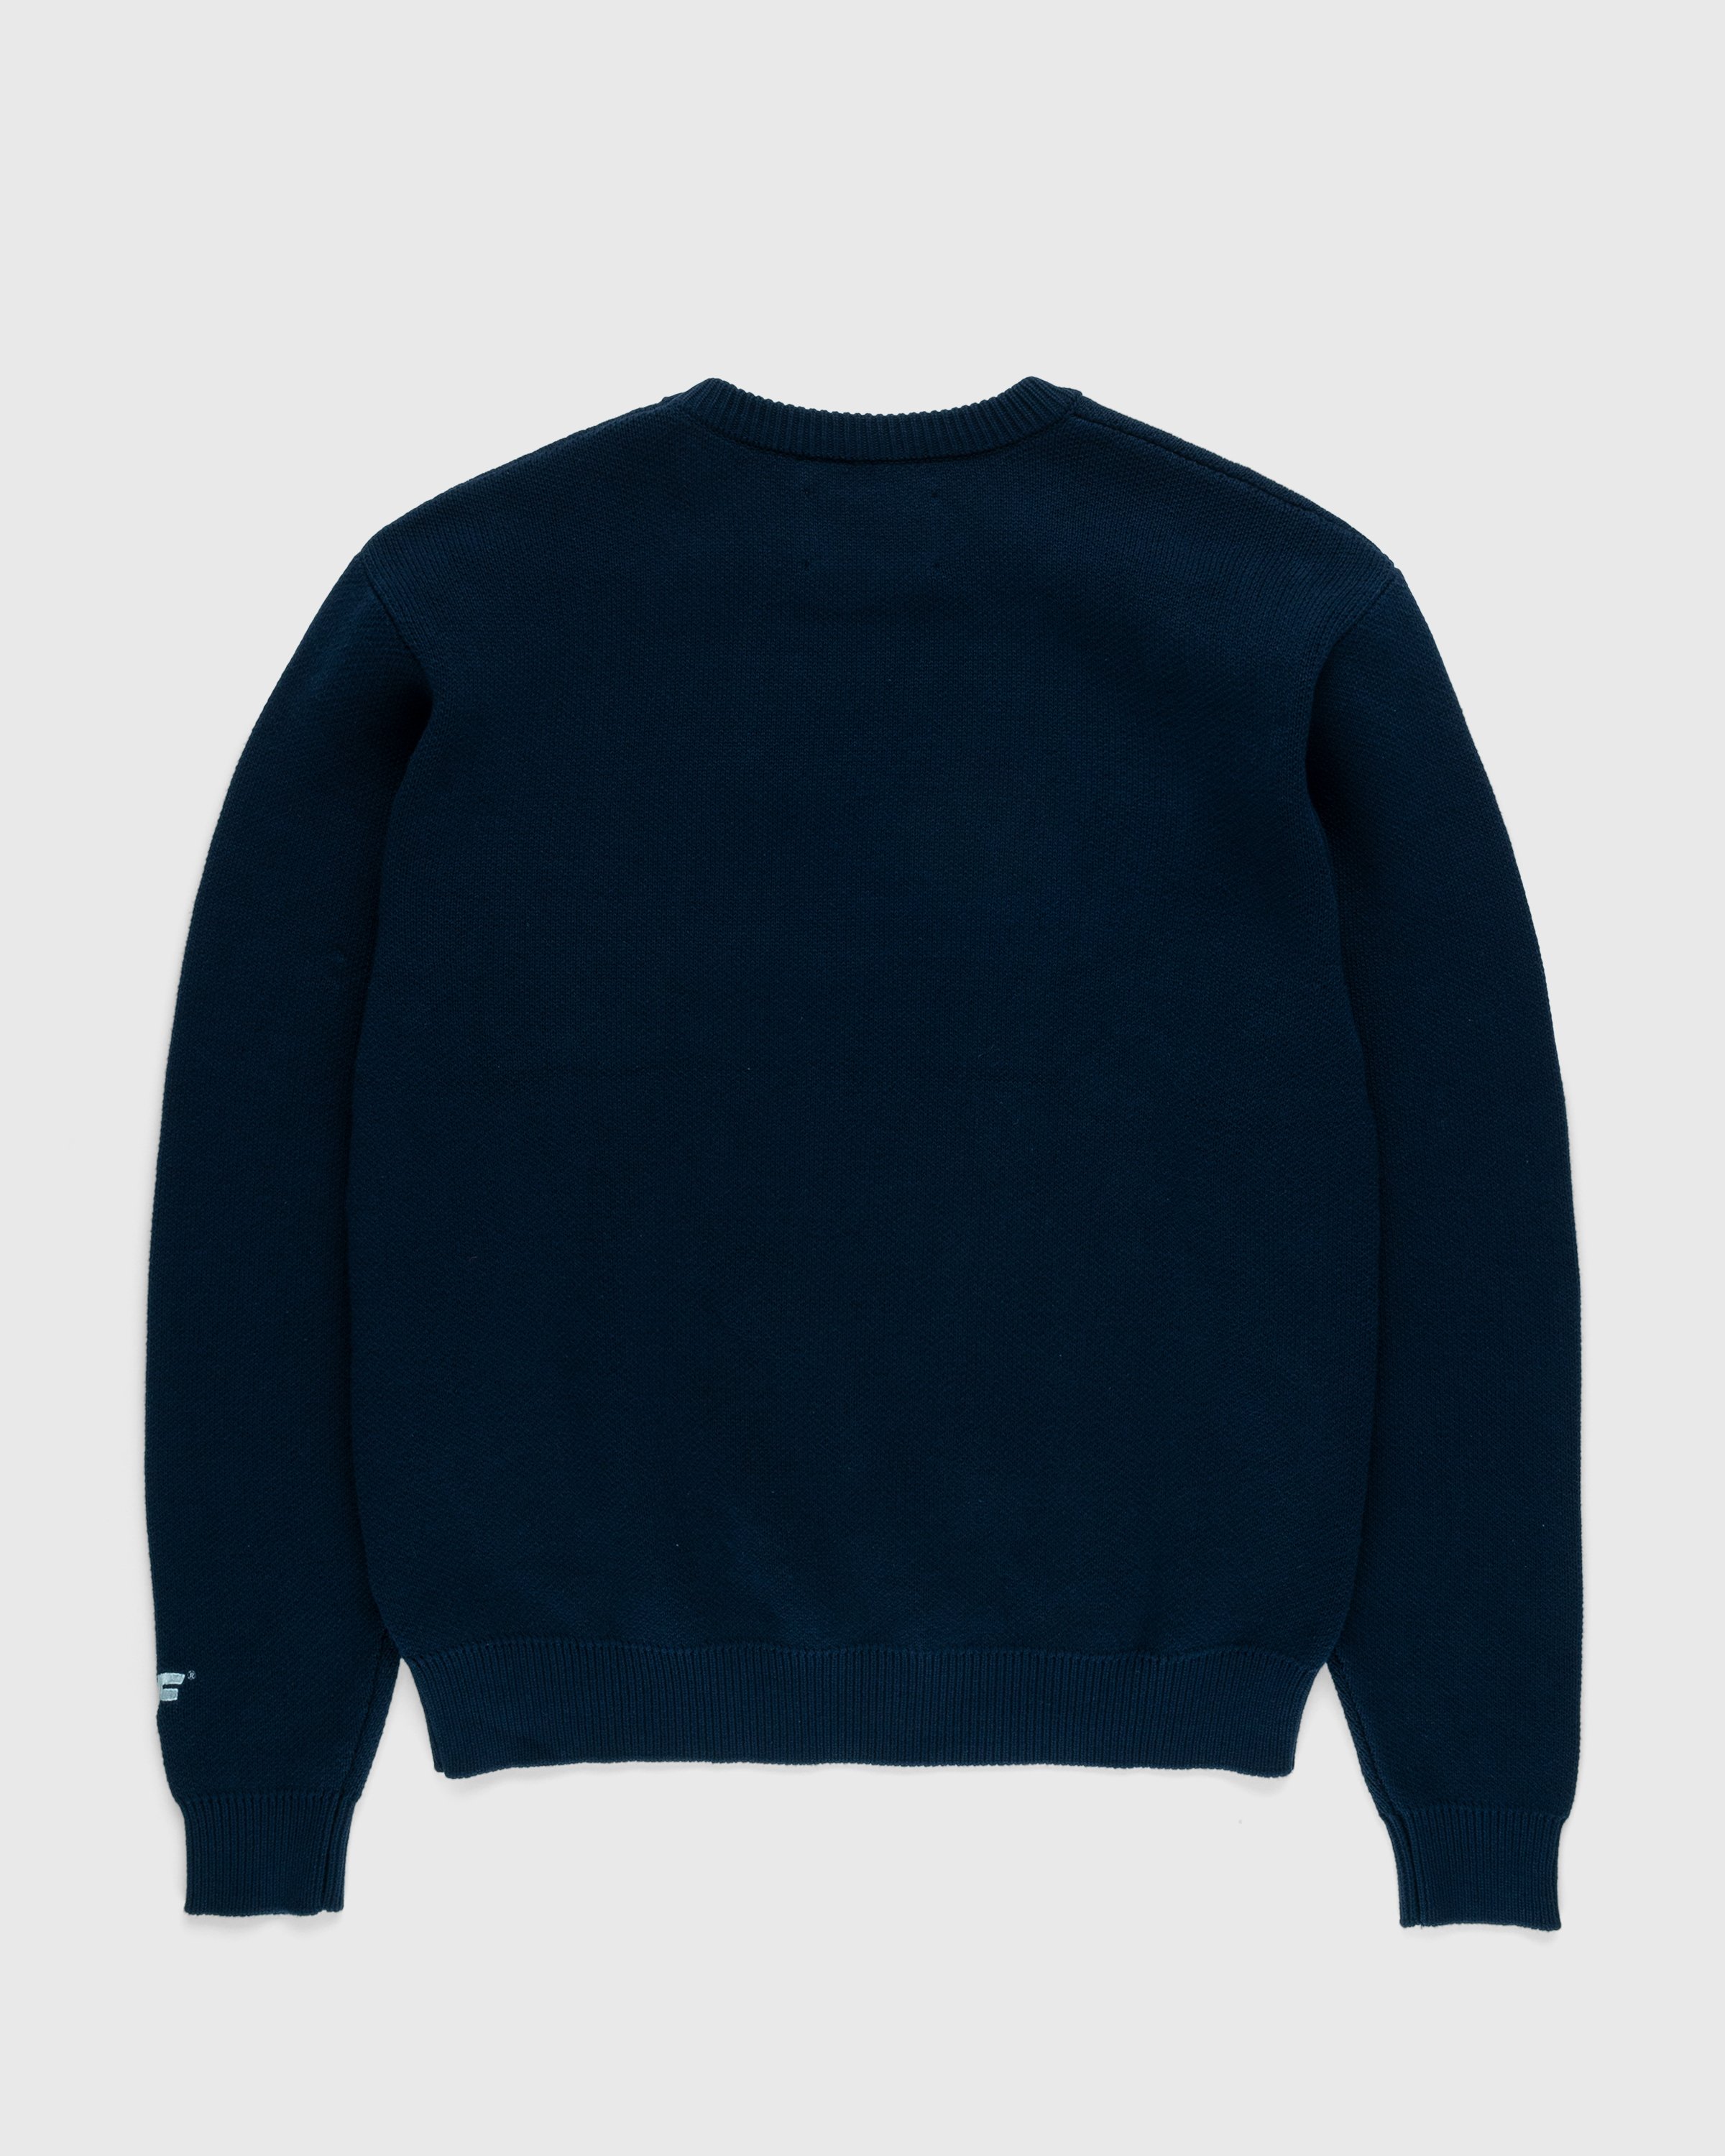 RUF x Highsnobiety – Knitted Crewneck Sweater Navy | Highsnobiety Shop